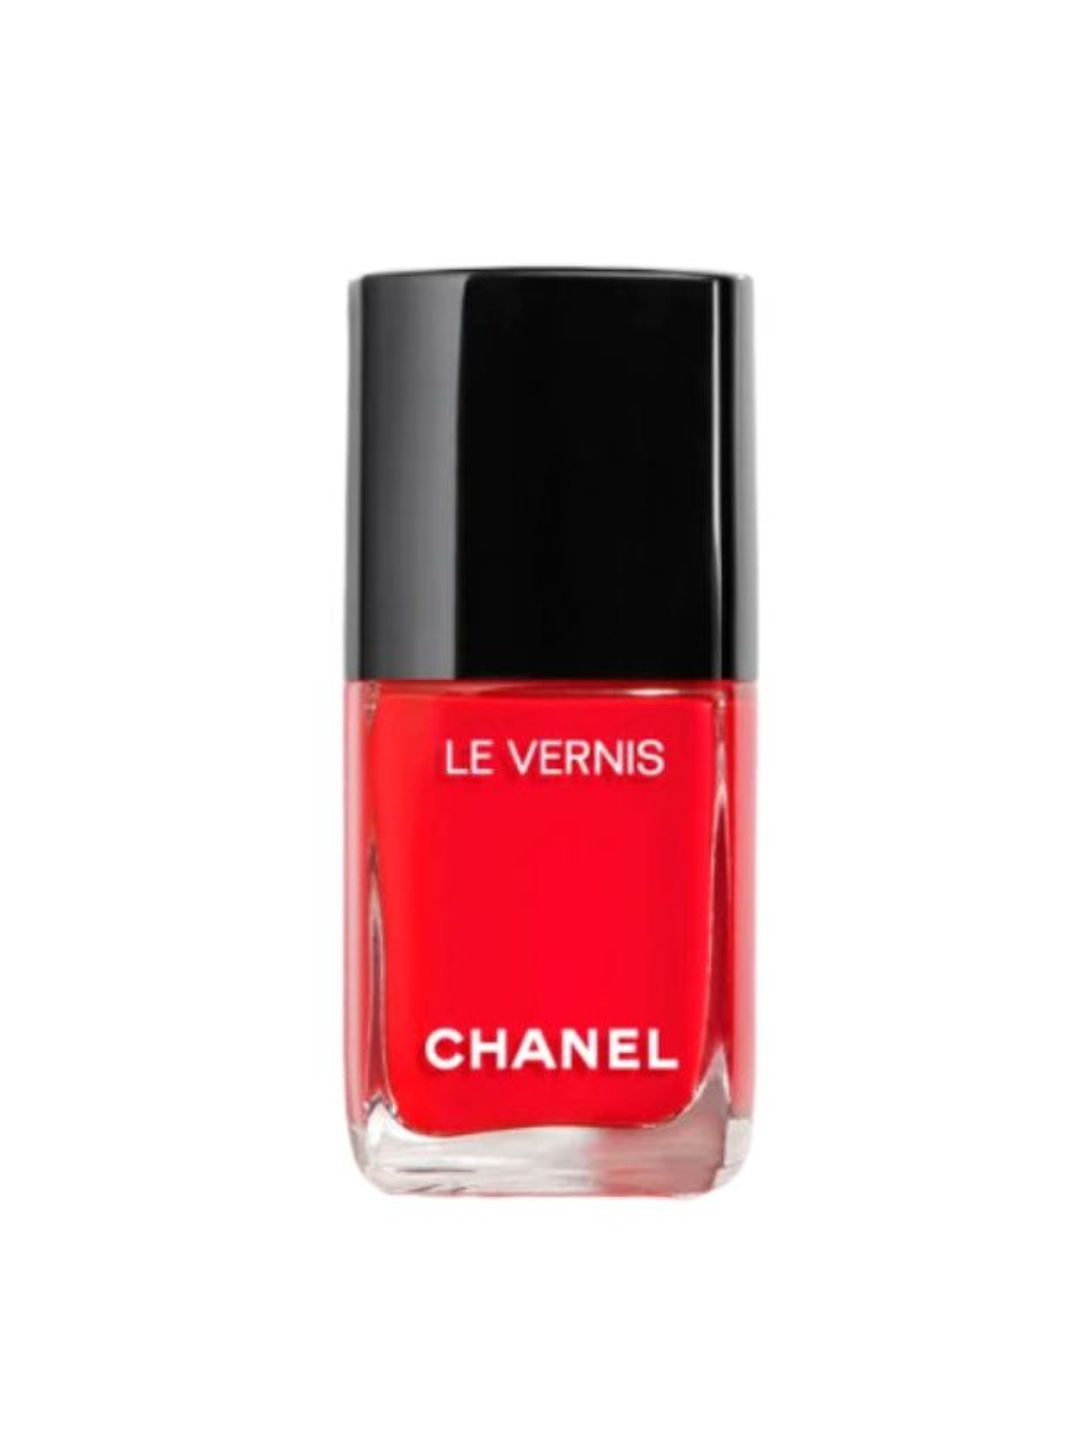 Le Vernis in 'Incendiaire' - Chanel 